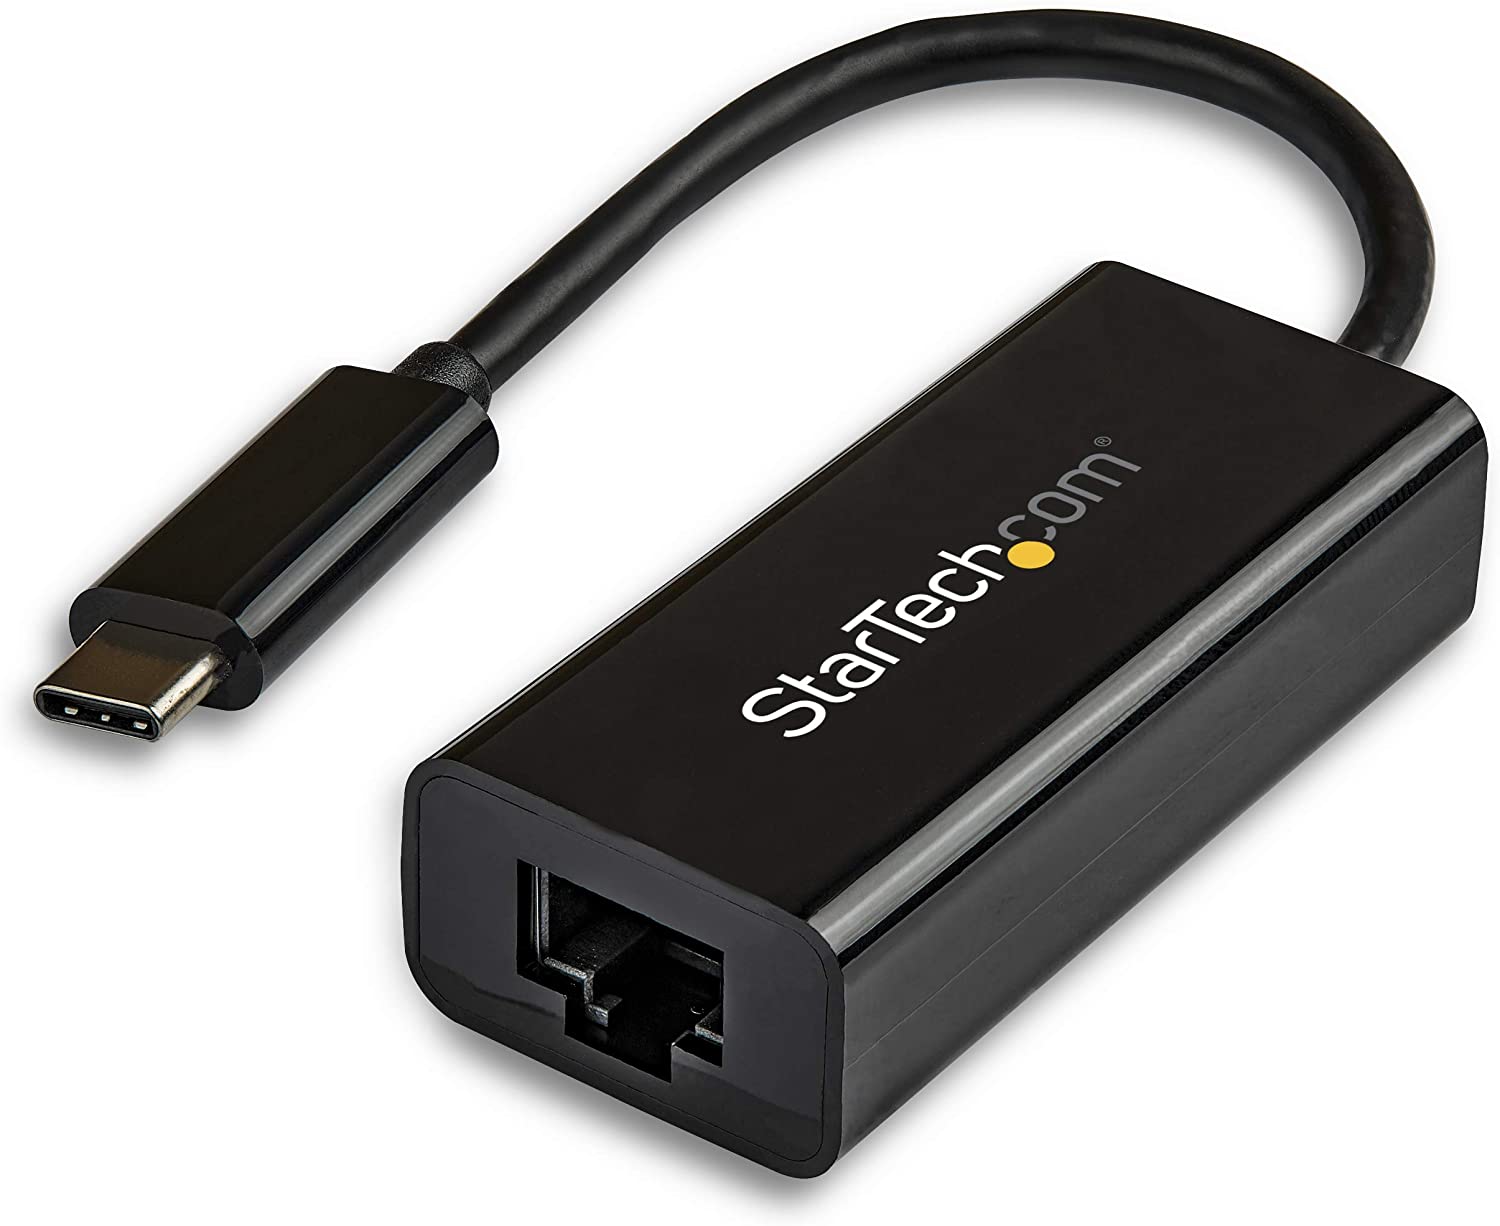 StarTech USB TYPE-C TO GIGABIT ETHERNET NETWORK ADAPTER(US1GC301AU) - Win-Pro Consultancy Pte Ltd